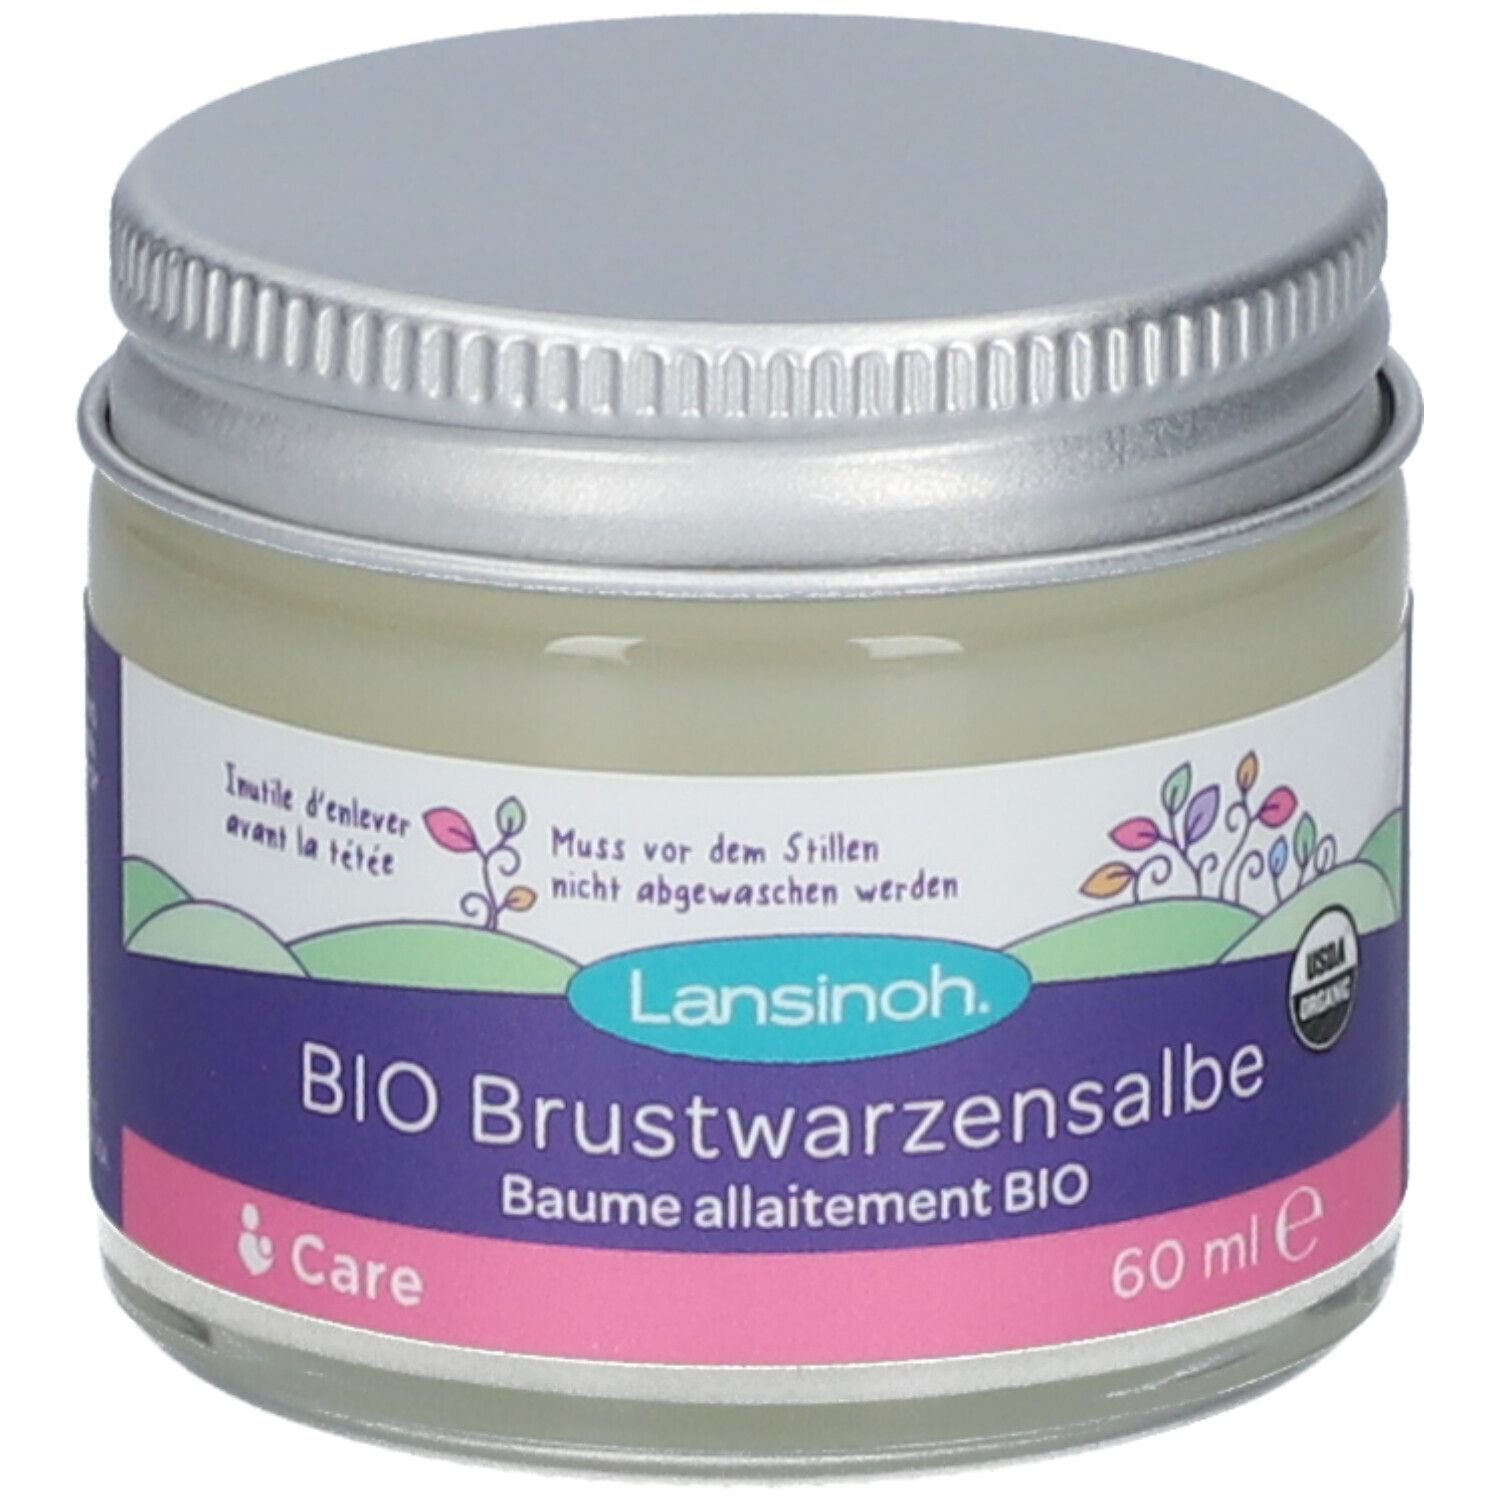 Lansinoh® Bio Brustwarzensalbe